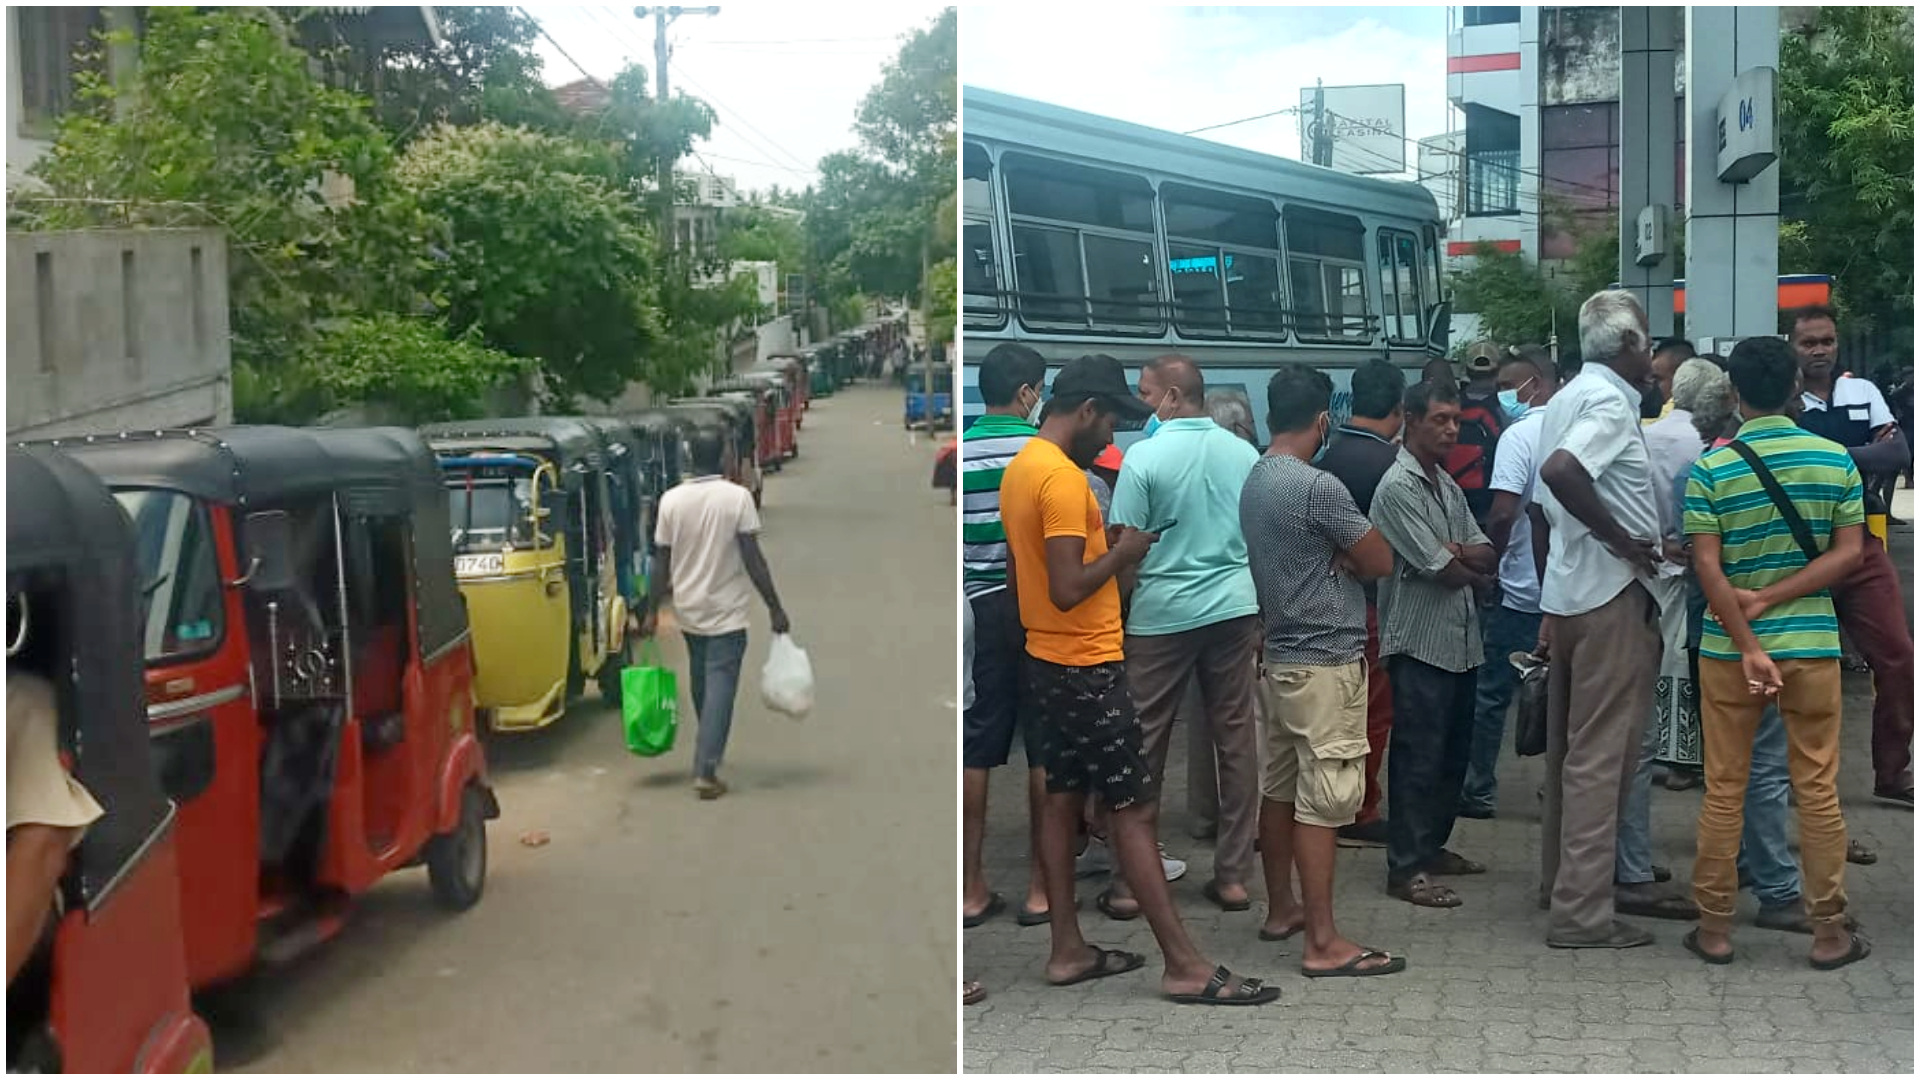 Sri lanka, fuel crisis, economic crisis, corruption, poverty